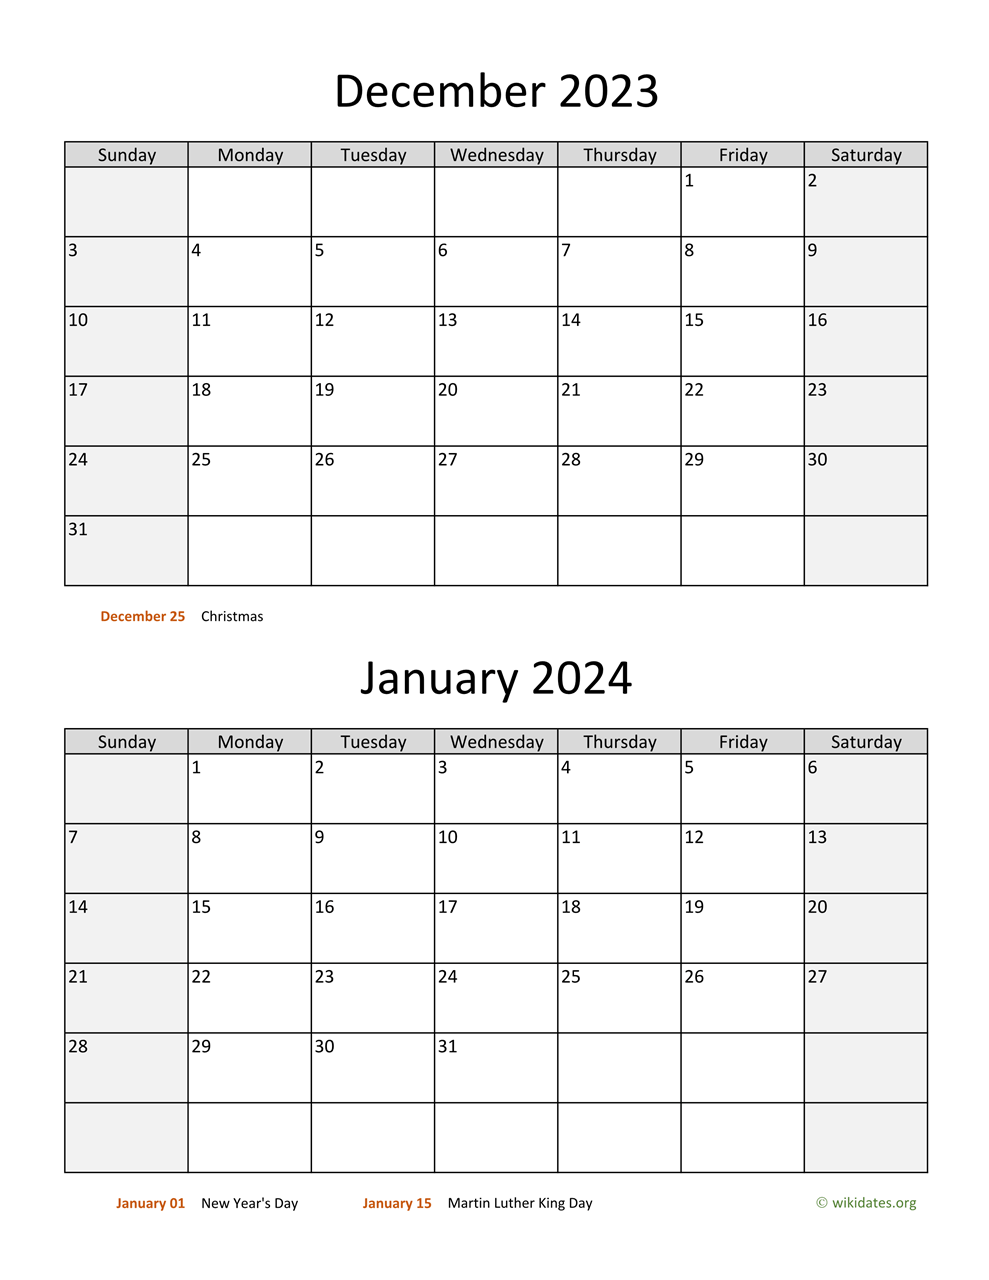 december 2022 and january 2023 calendar december 2022 calendar - printable calendar free printable monthly calendars to download for 2023 | 2023 printable calendar january to december